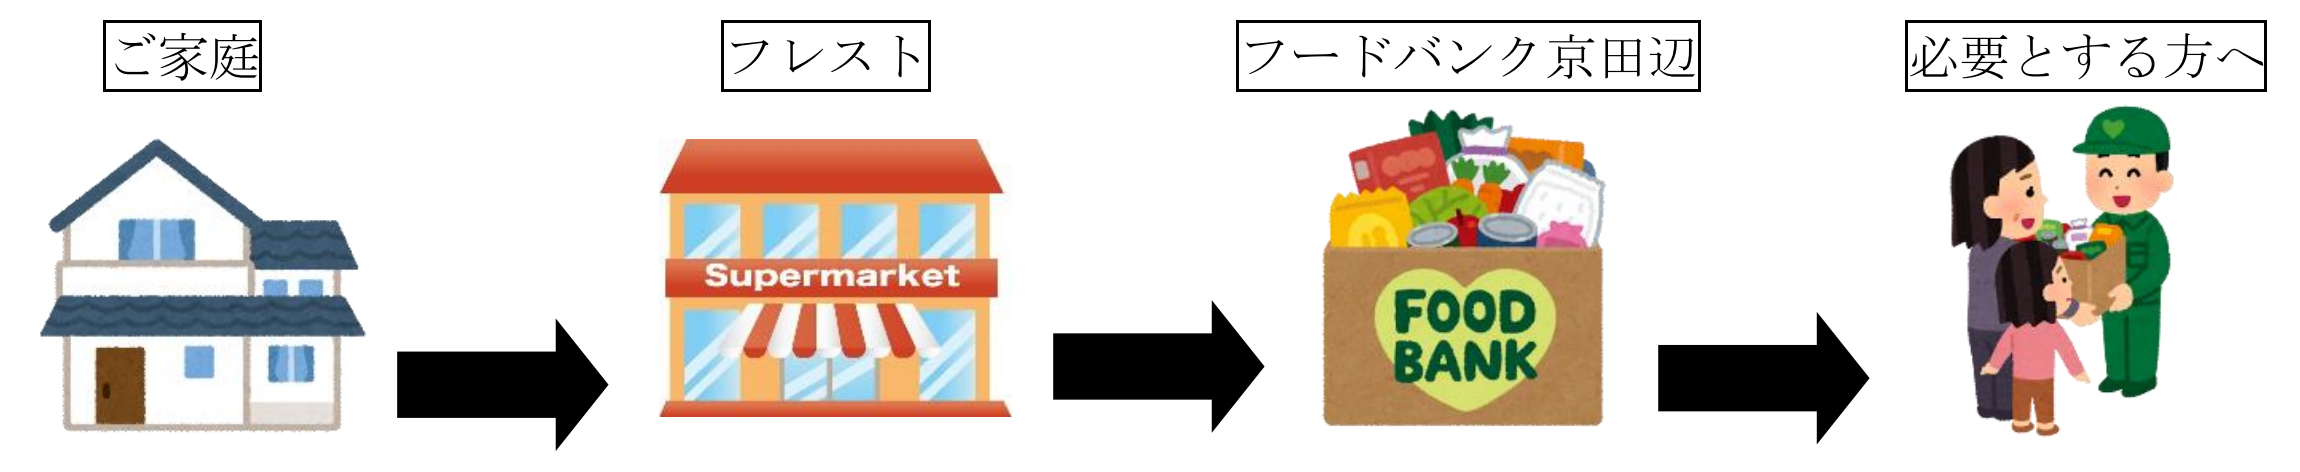 「ＪＡタウン」公式アンバサダー石川佳純選手 今月の『おすすめ商品』は「浜松餃子」！ もう一つの商品は「ニューピオーネ」！！